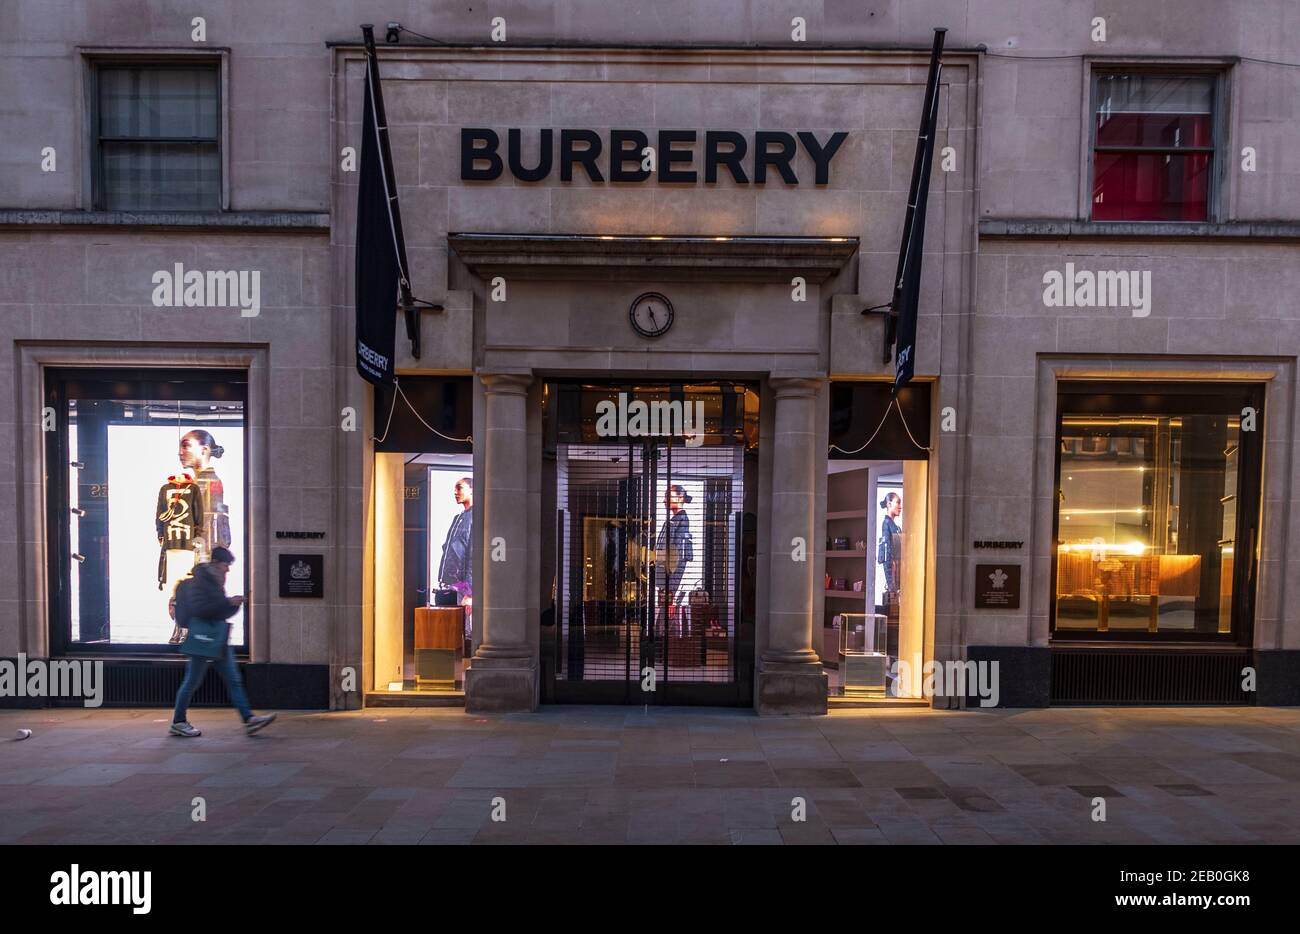 London england uk burberry shop Immagini e Fotos Stock - Alamy